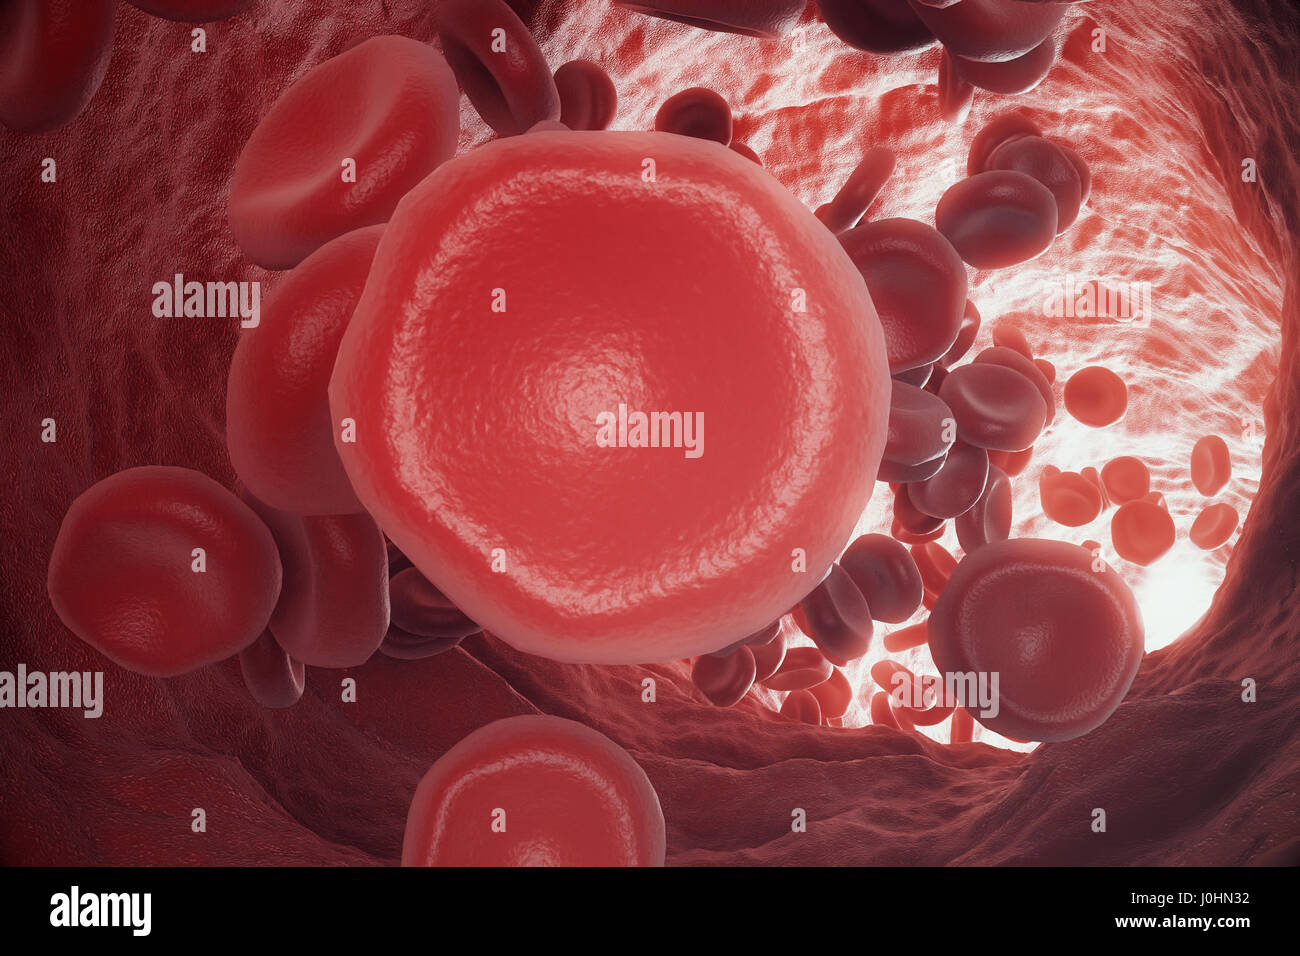 Roten Blutkörperchen in Vene oder Arterie, fließen innerhalb innerhalb eines Lebewesens, 3D-Rendering Stockfoto